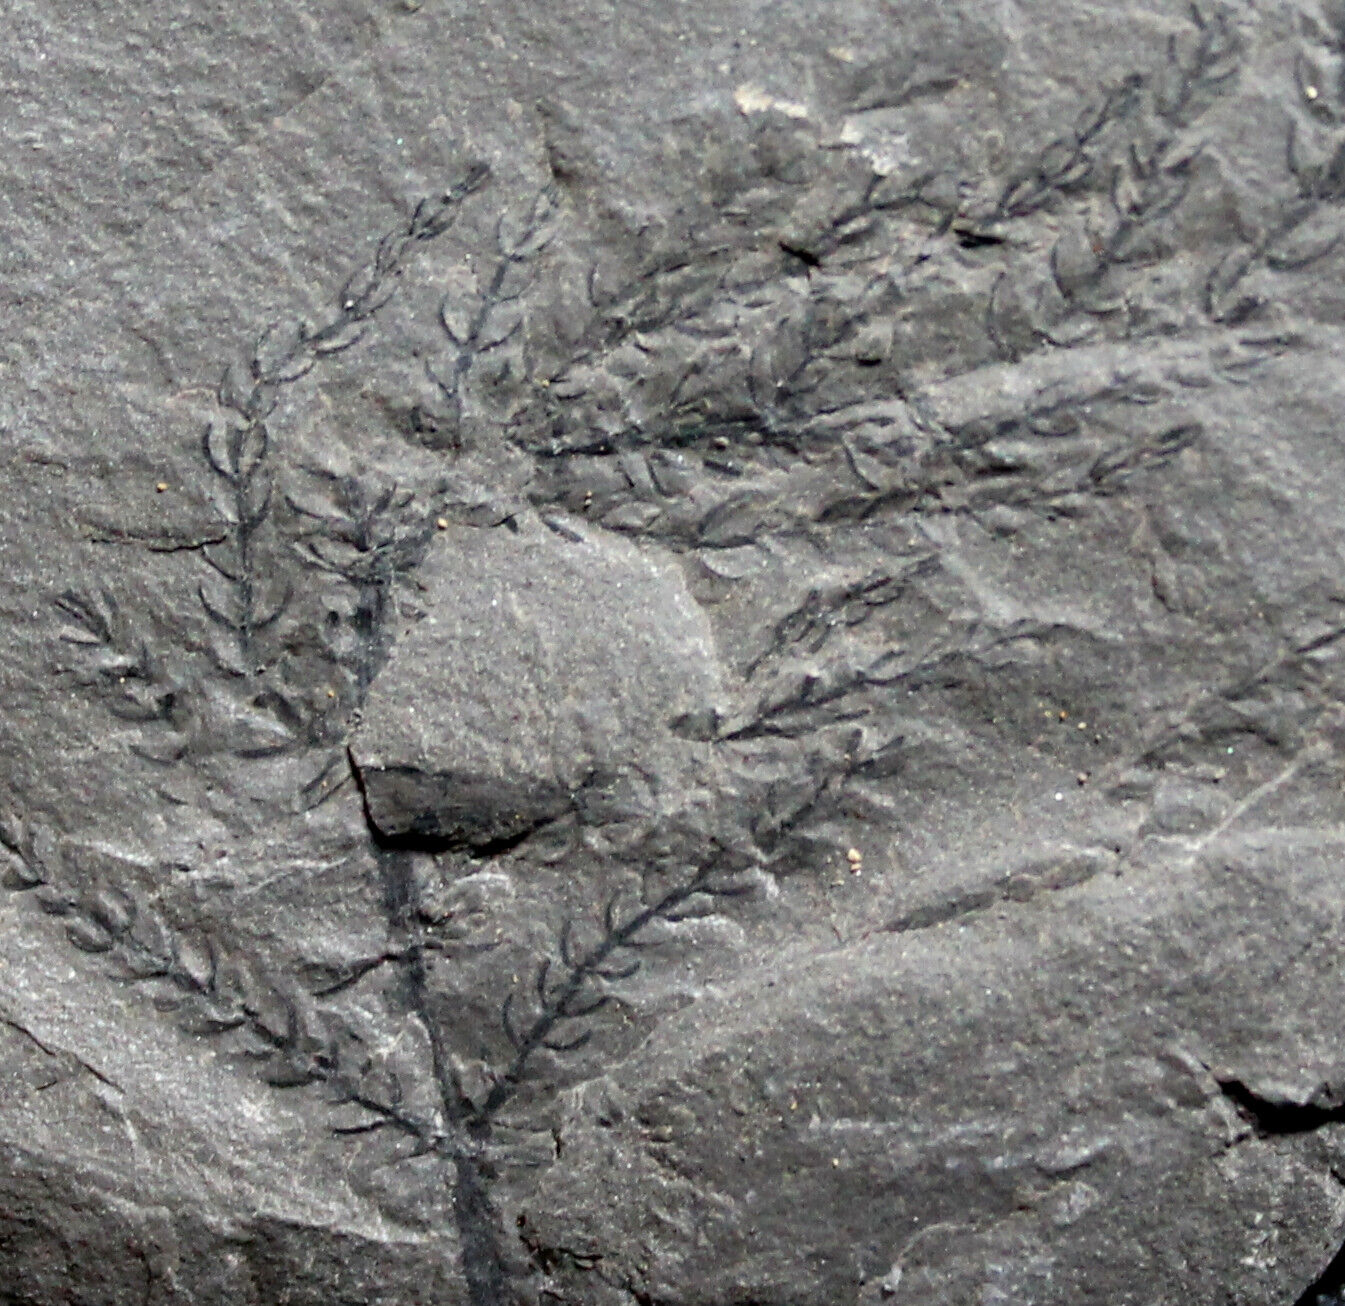 Asterophyllites grandis - Rare, well preserved Carboniferous Calamite plant